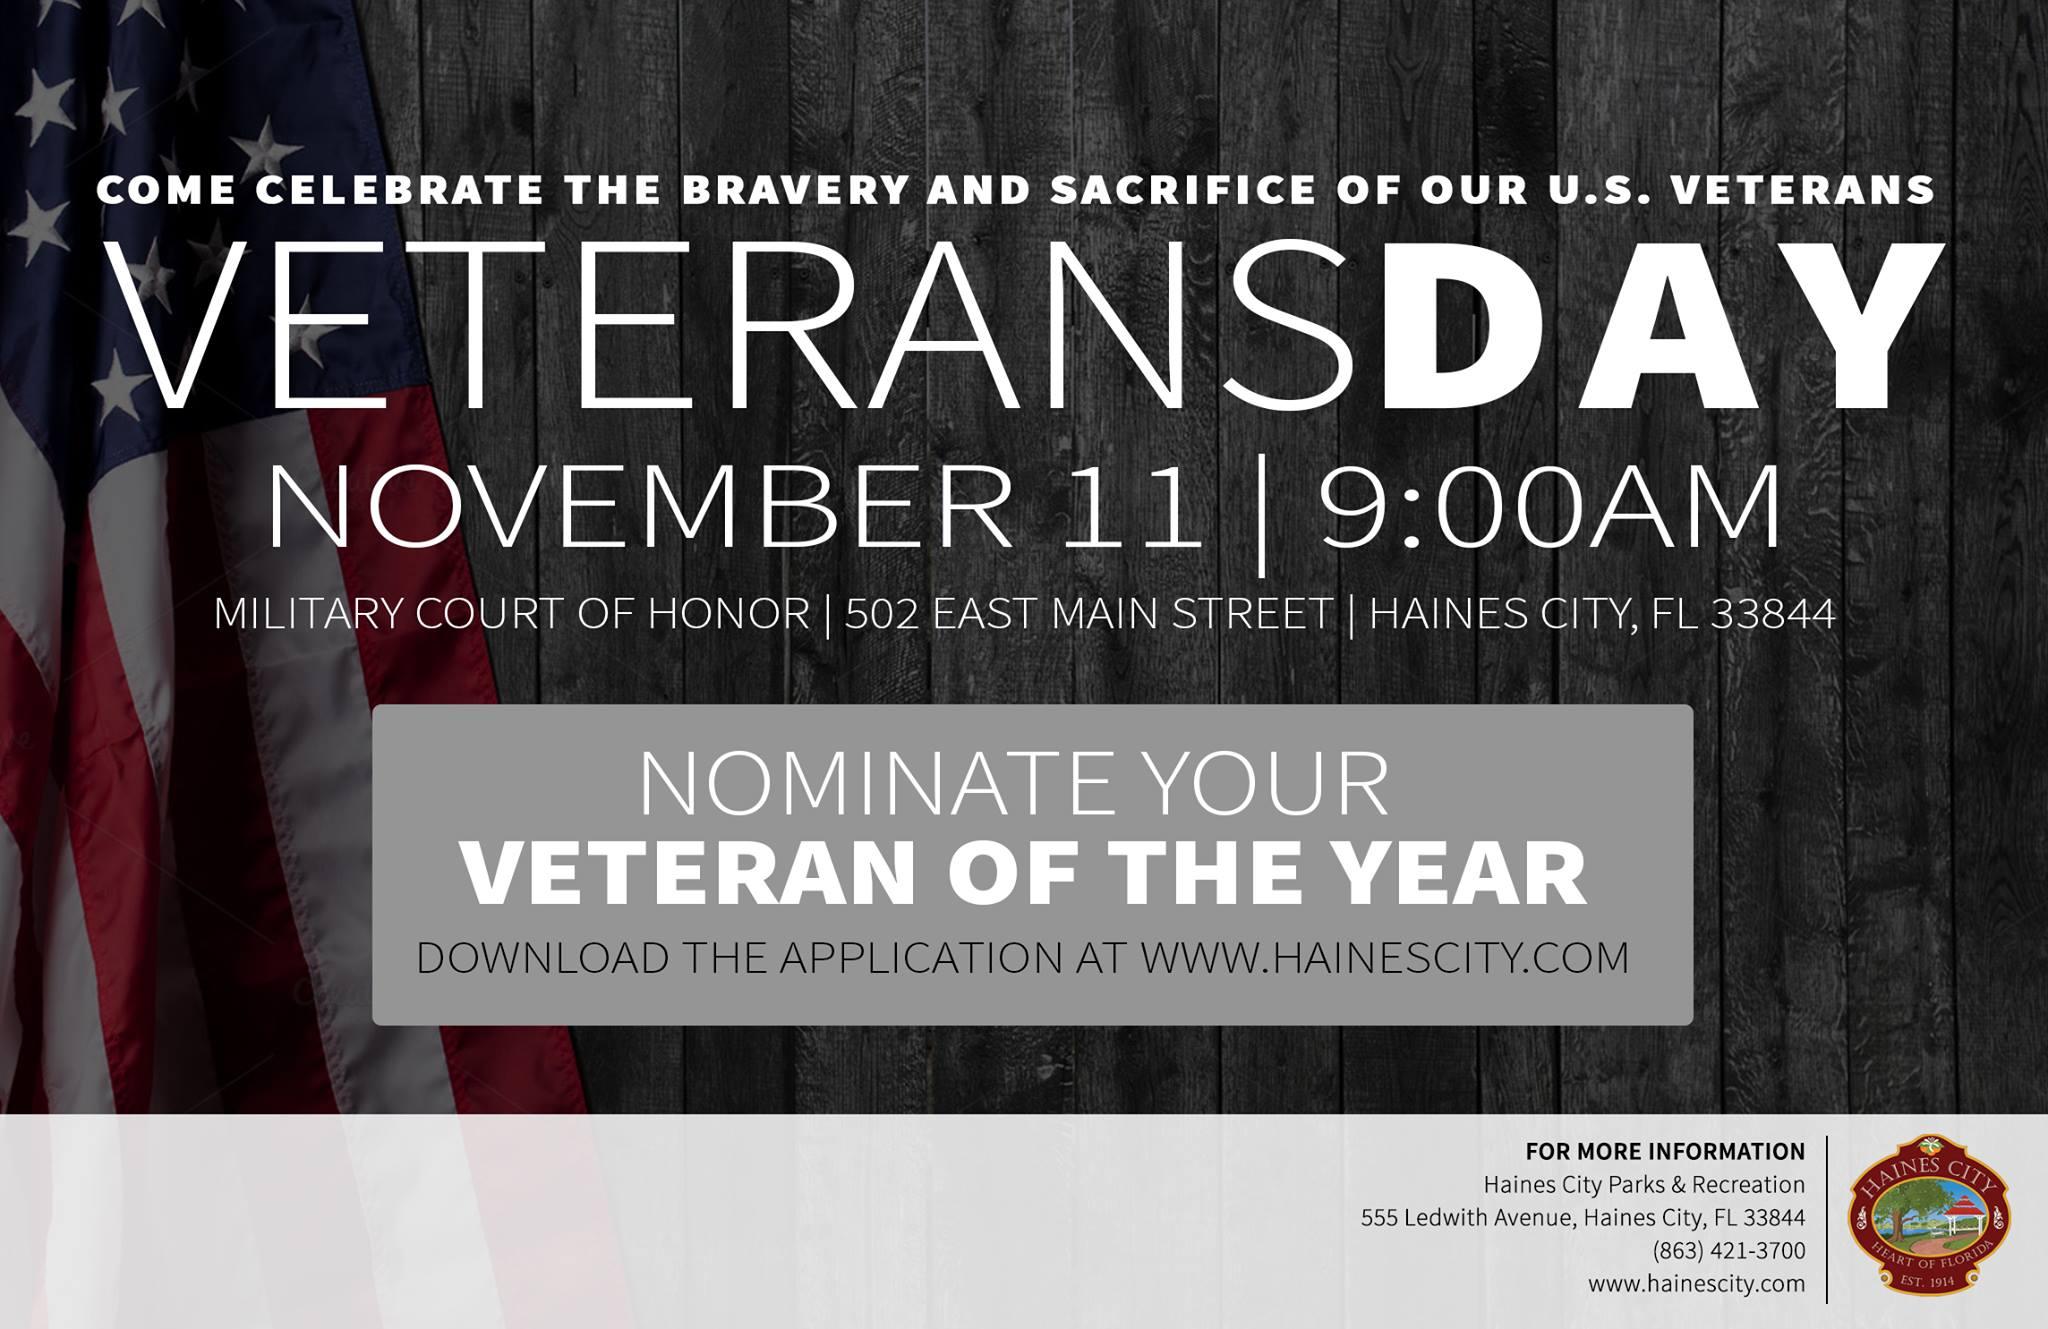 Veterans Day in Haines City, FL
Fri Nov 11, 12:00 AM - Sat Nov 12, 12:00 AM
in 22 days